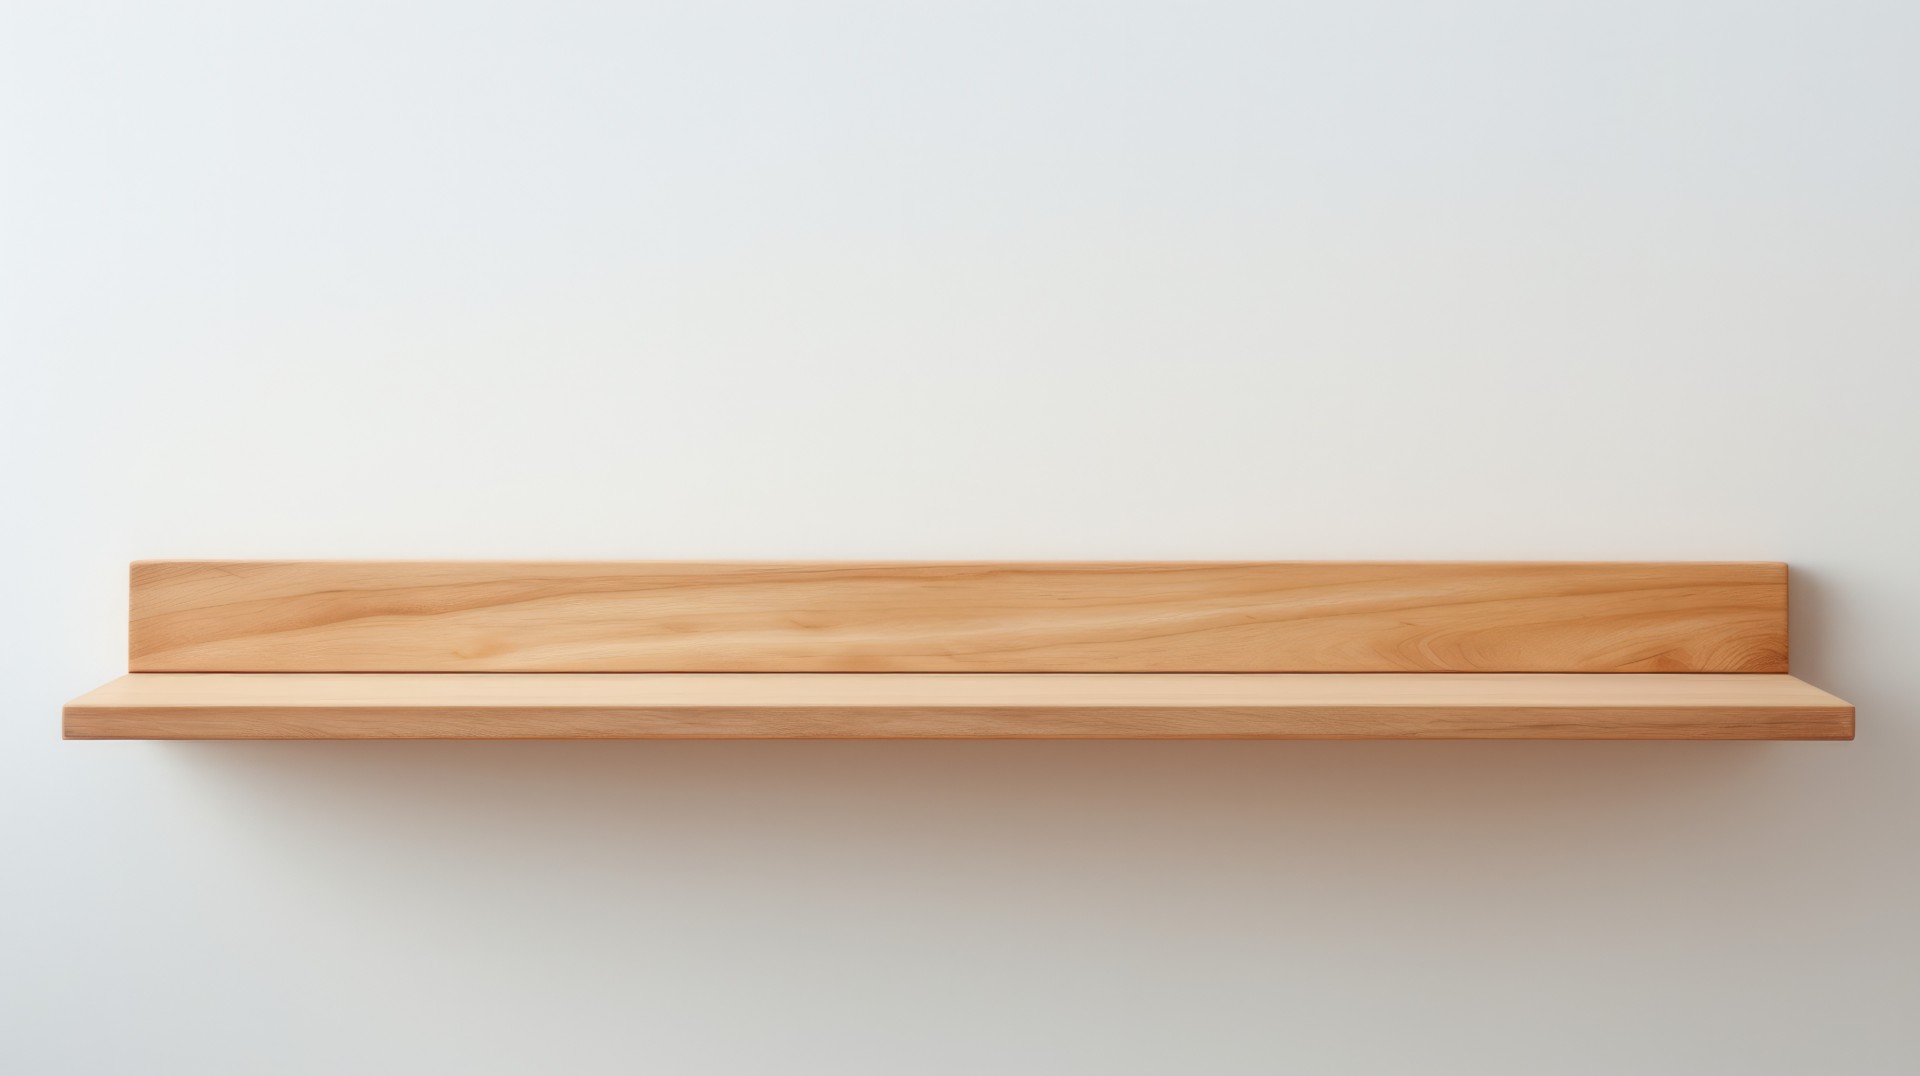 Slim line wooden ledge shelf as a space-saving bedside table design